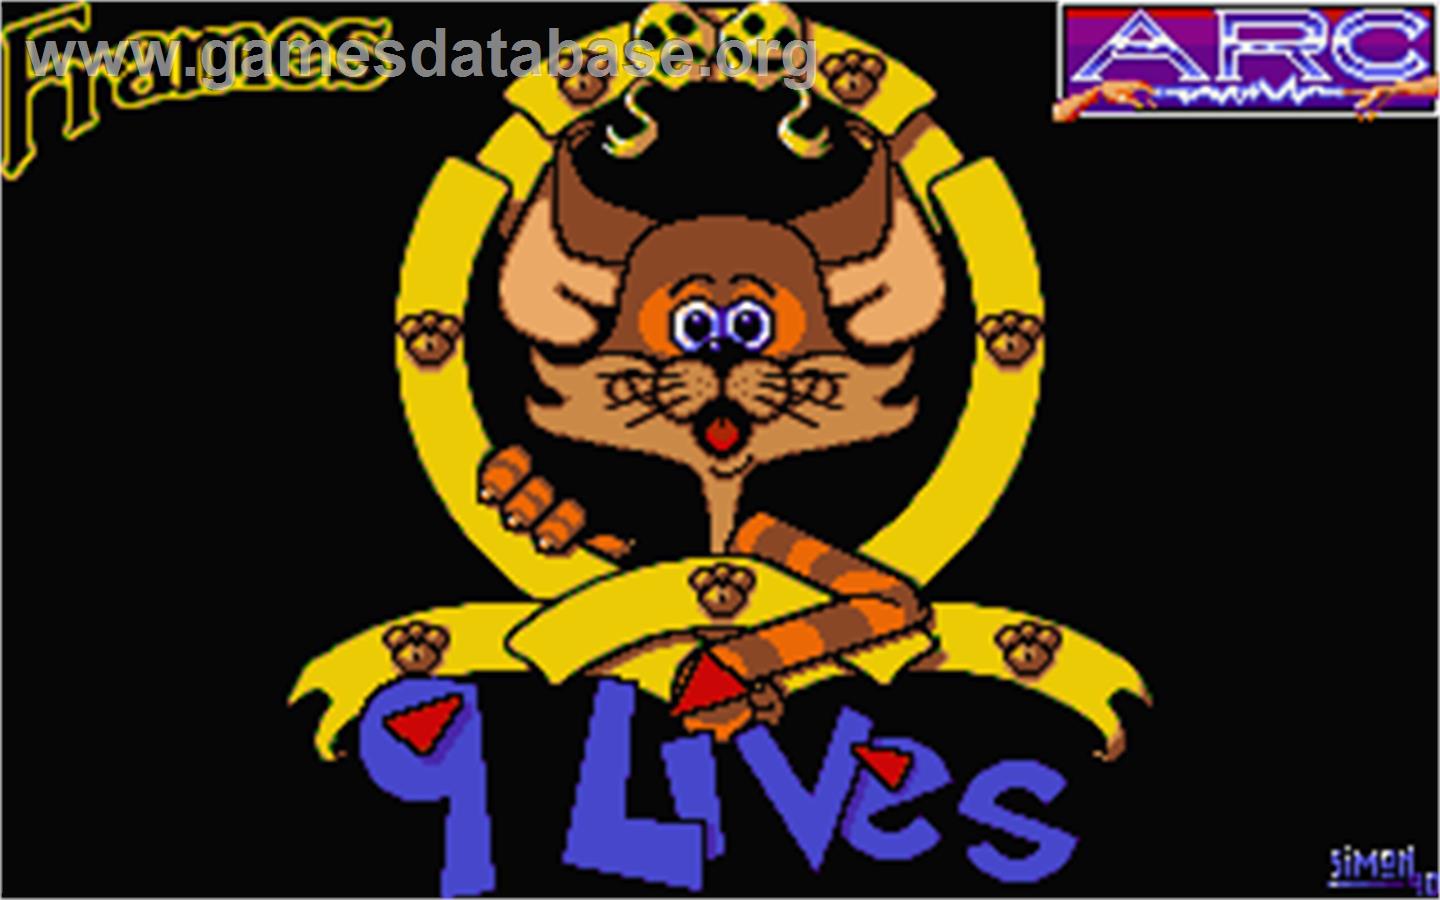 9 Lives - Atari ST - Artwork - Title Screen